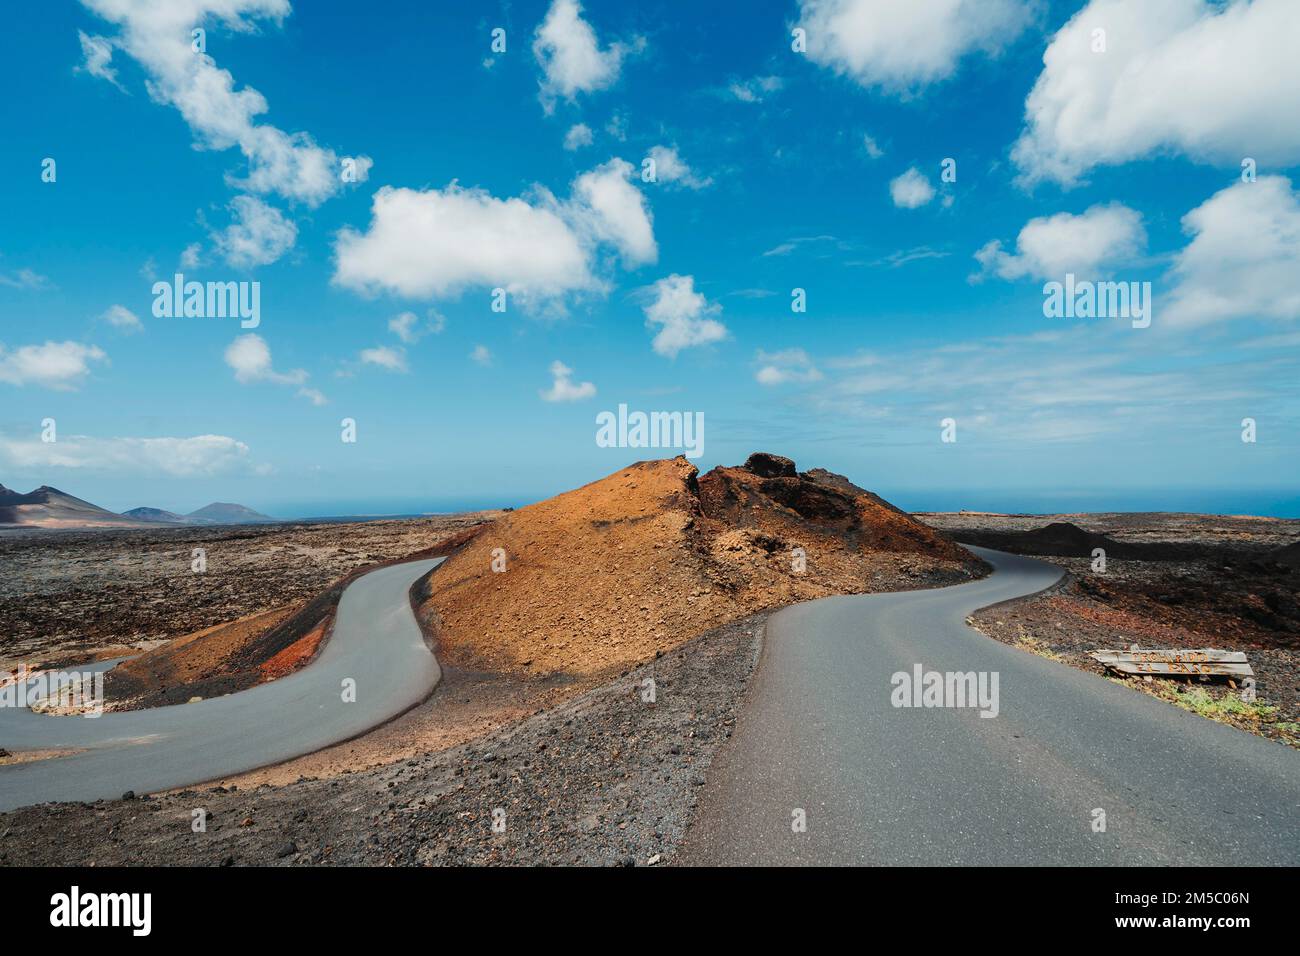 Asphalt road in volcanic arid landscape of Timanfaya National Park, Lanzarote, Canary Islands, Spain Stock Photo